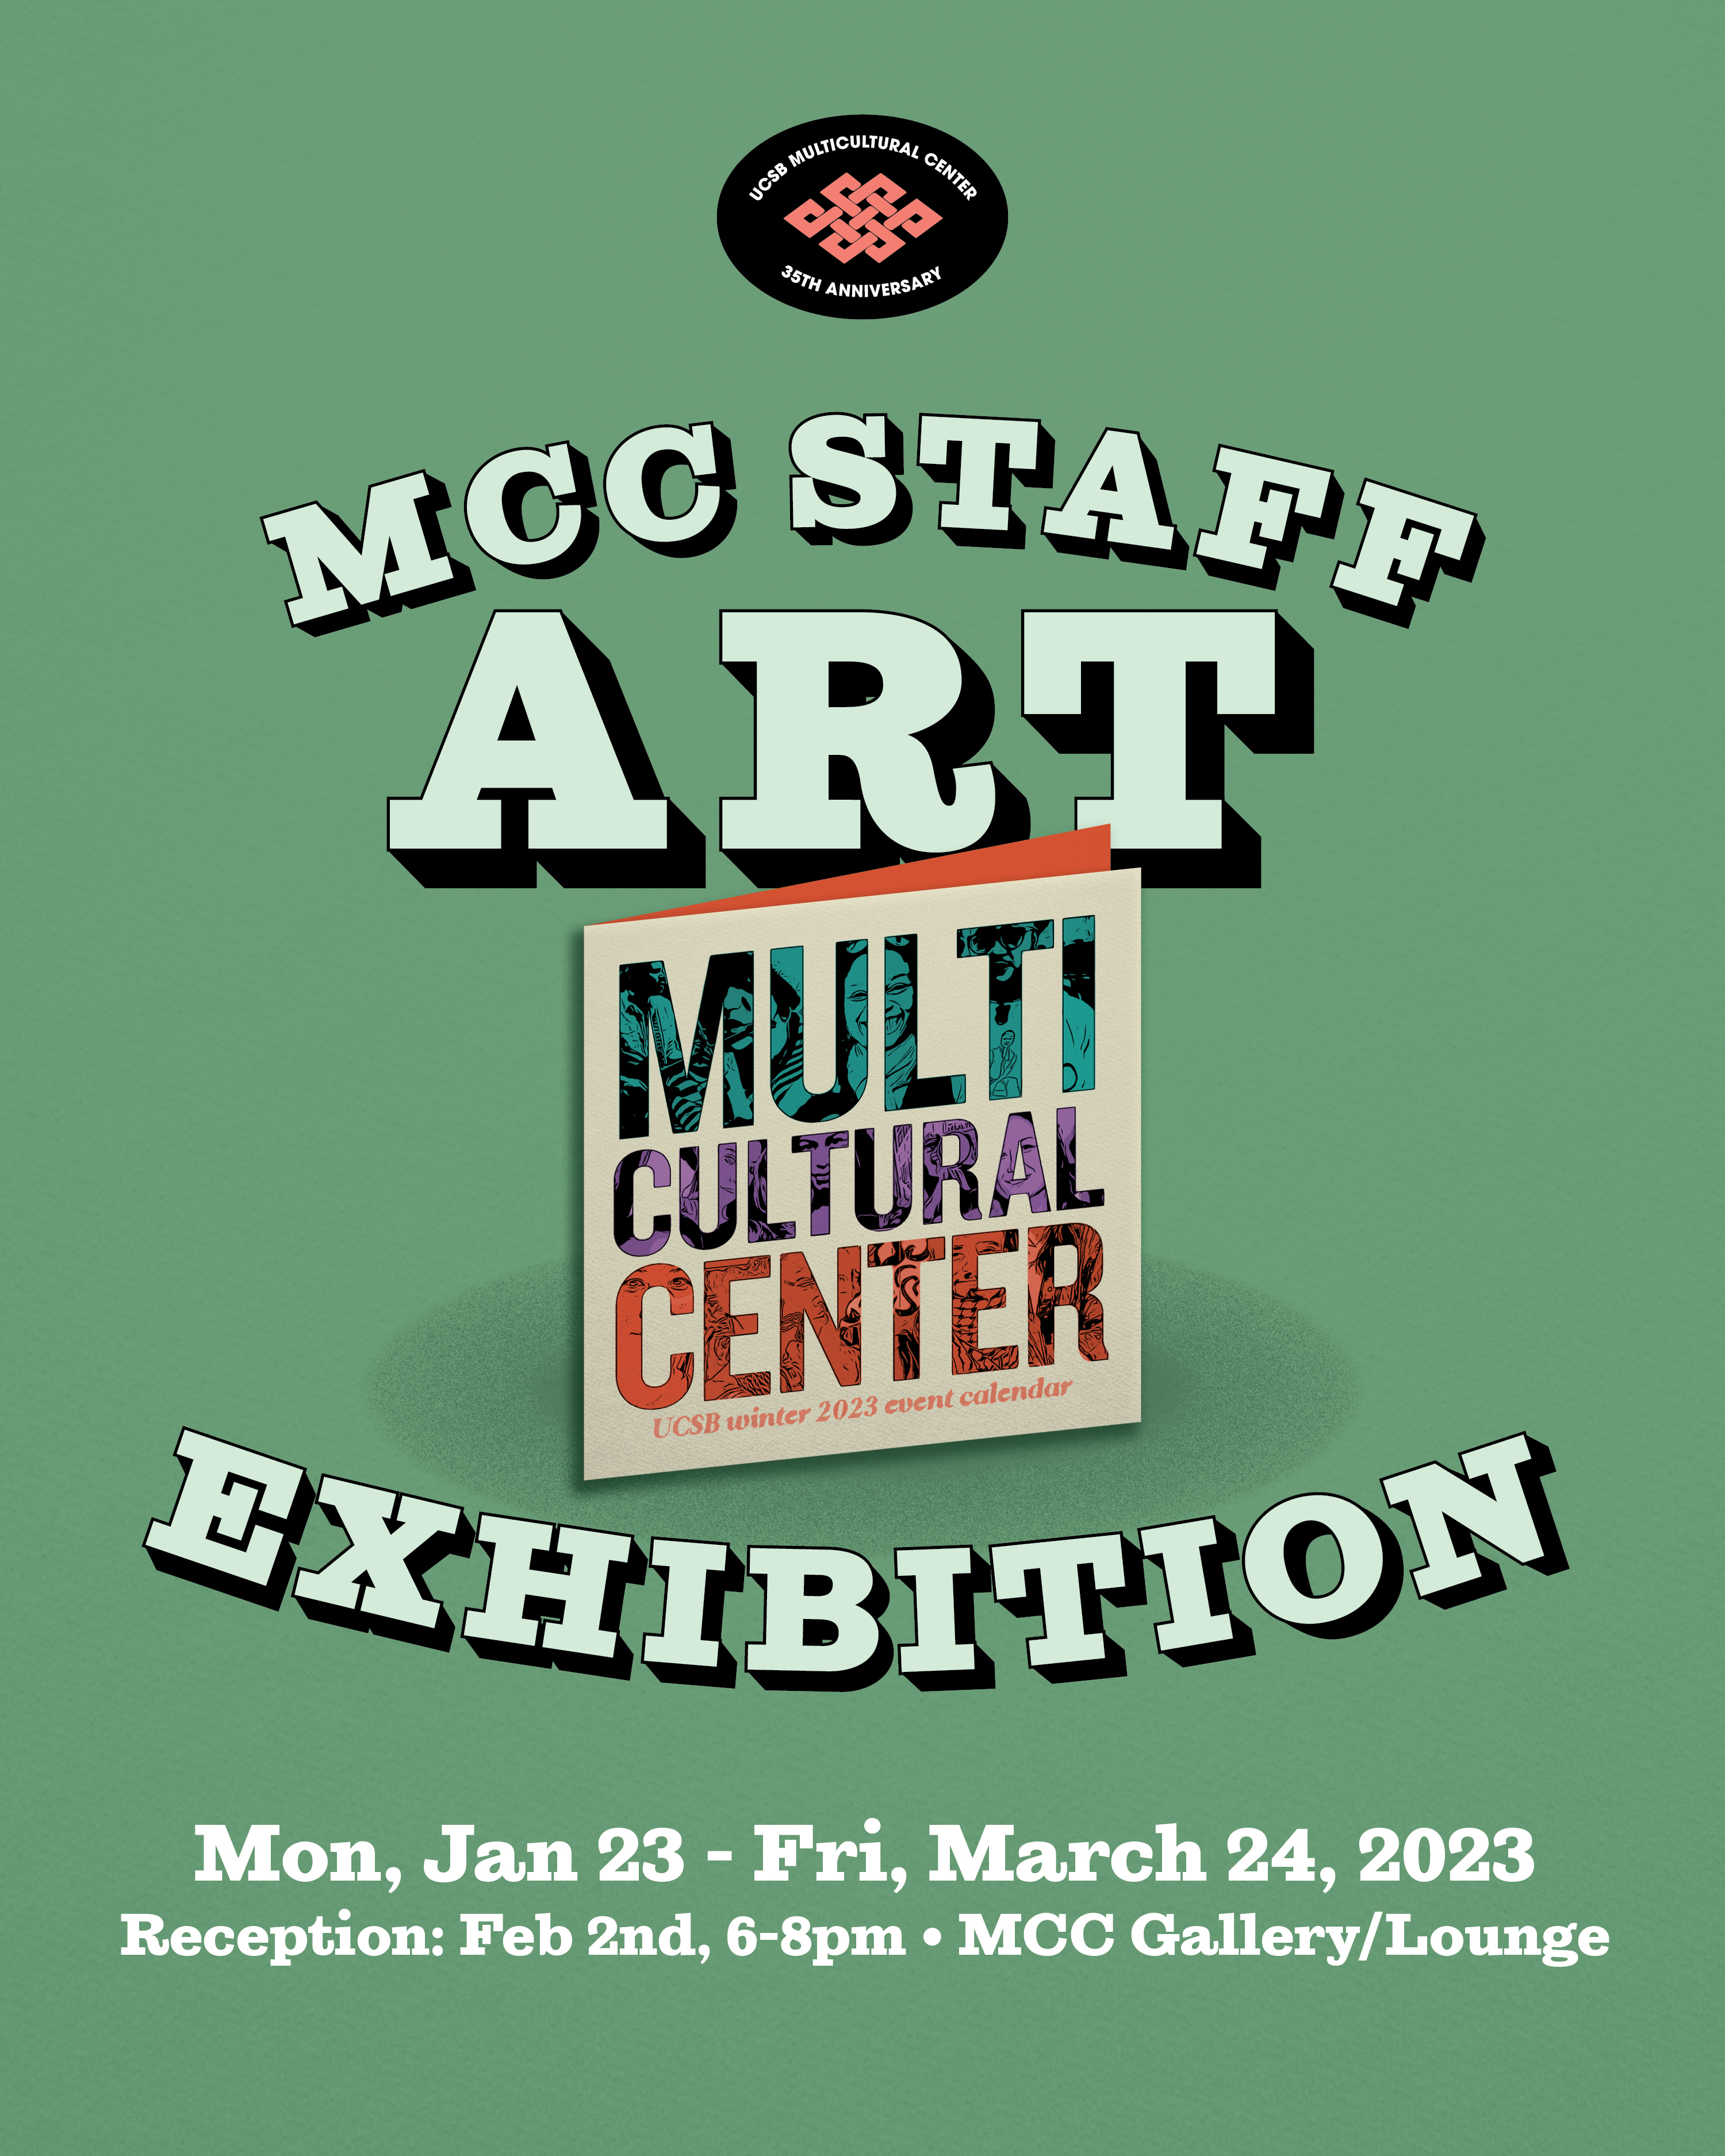 MCC Staff Art Exhibition